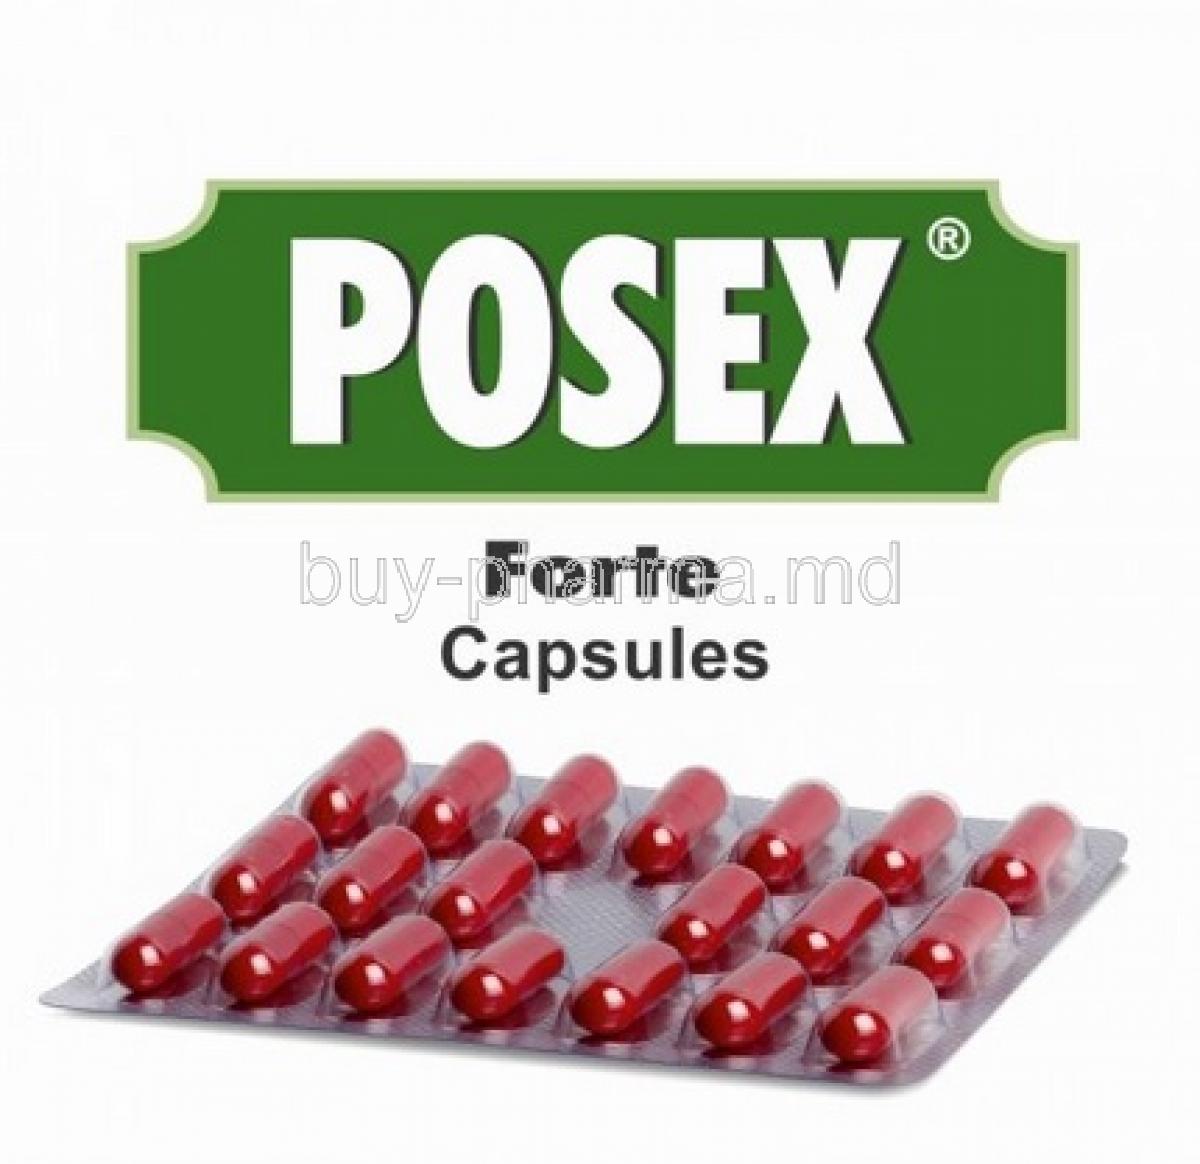 Posex Forte box and capsules